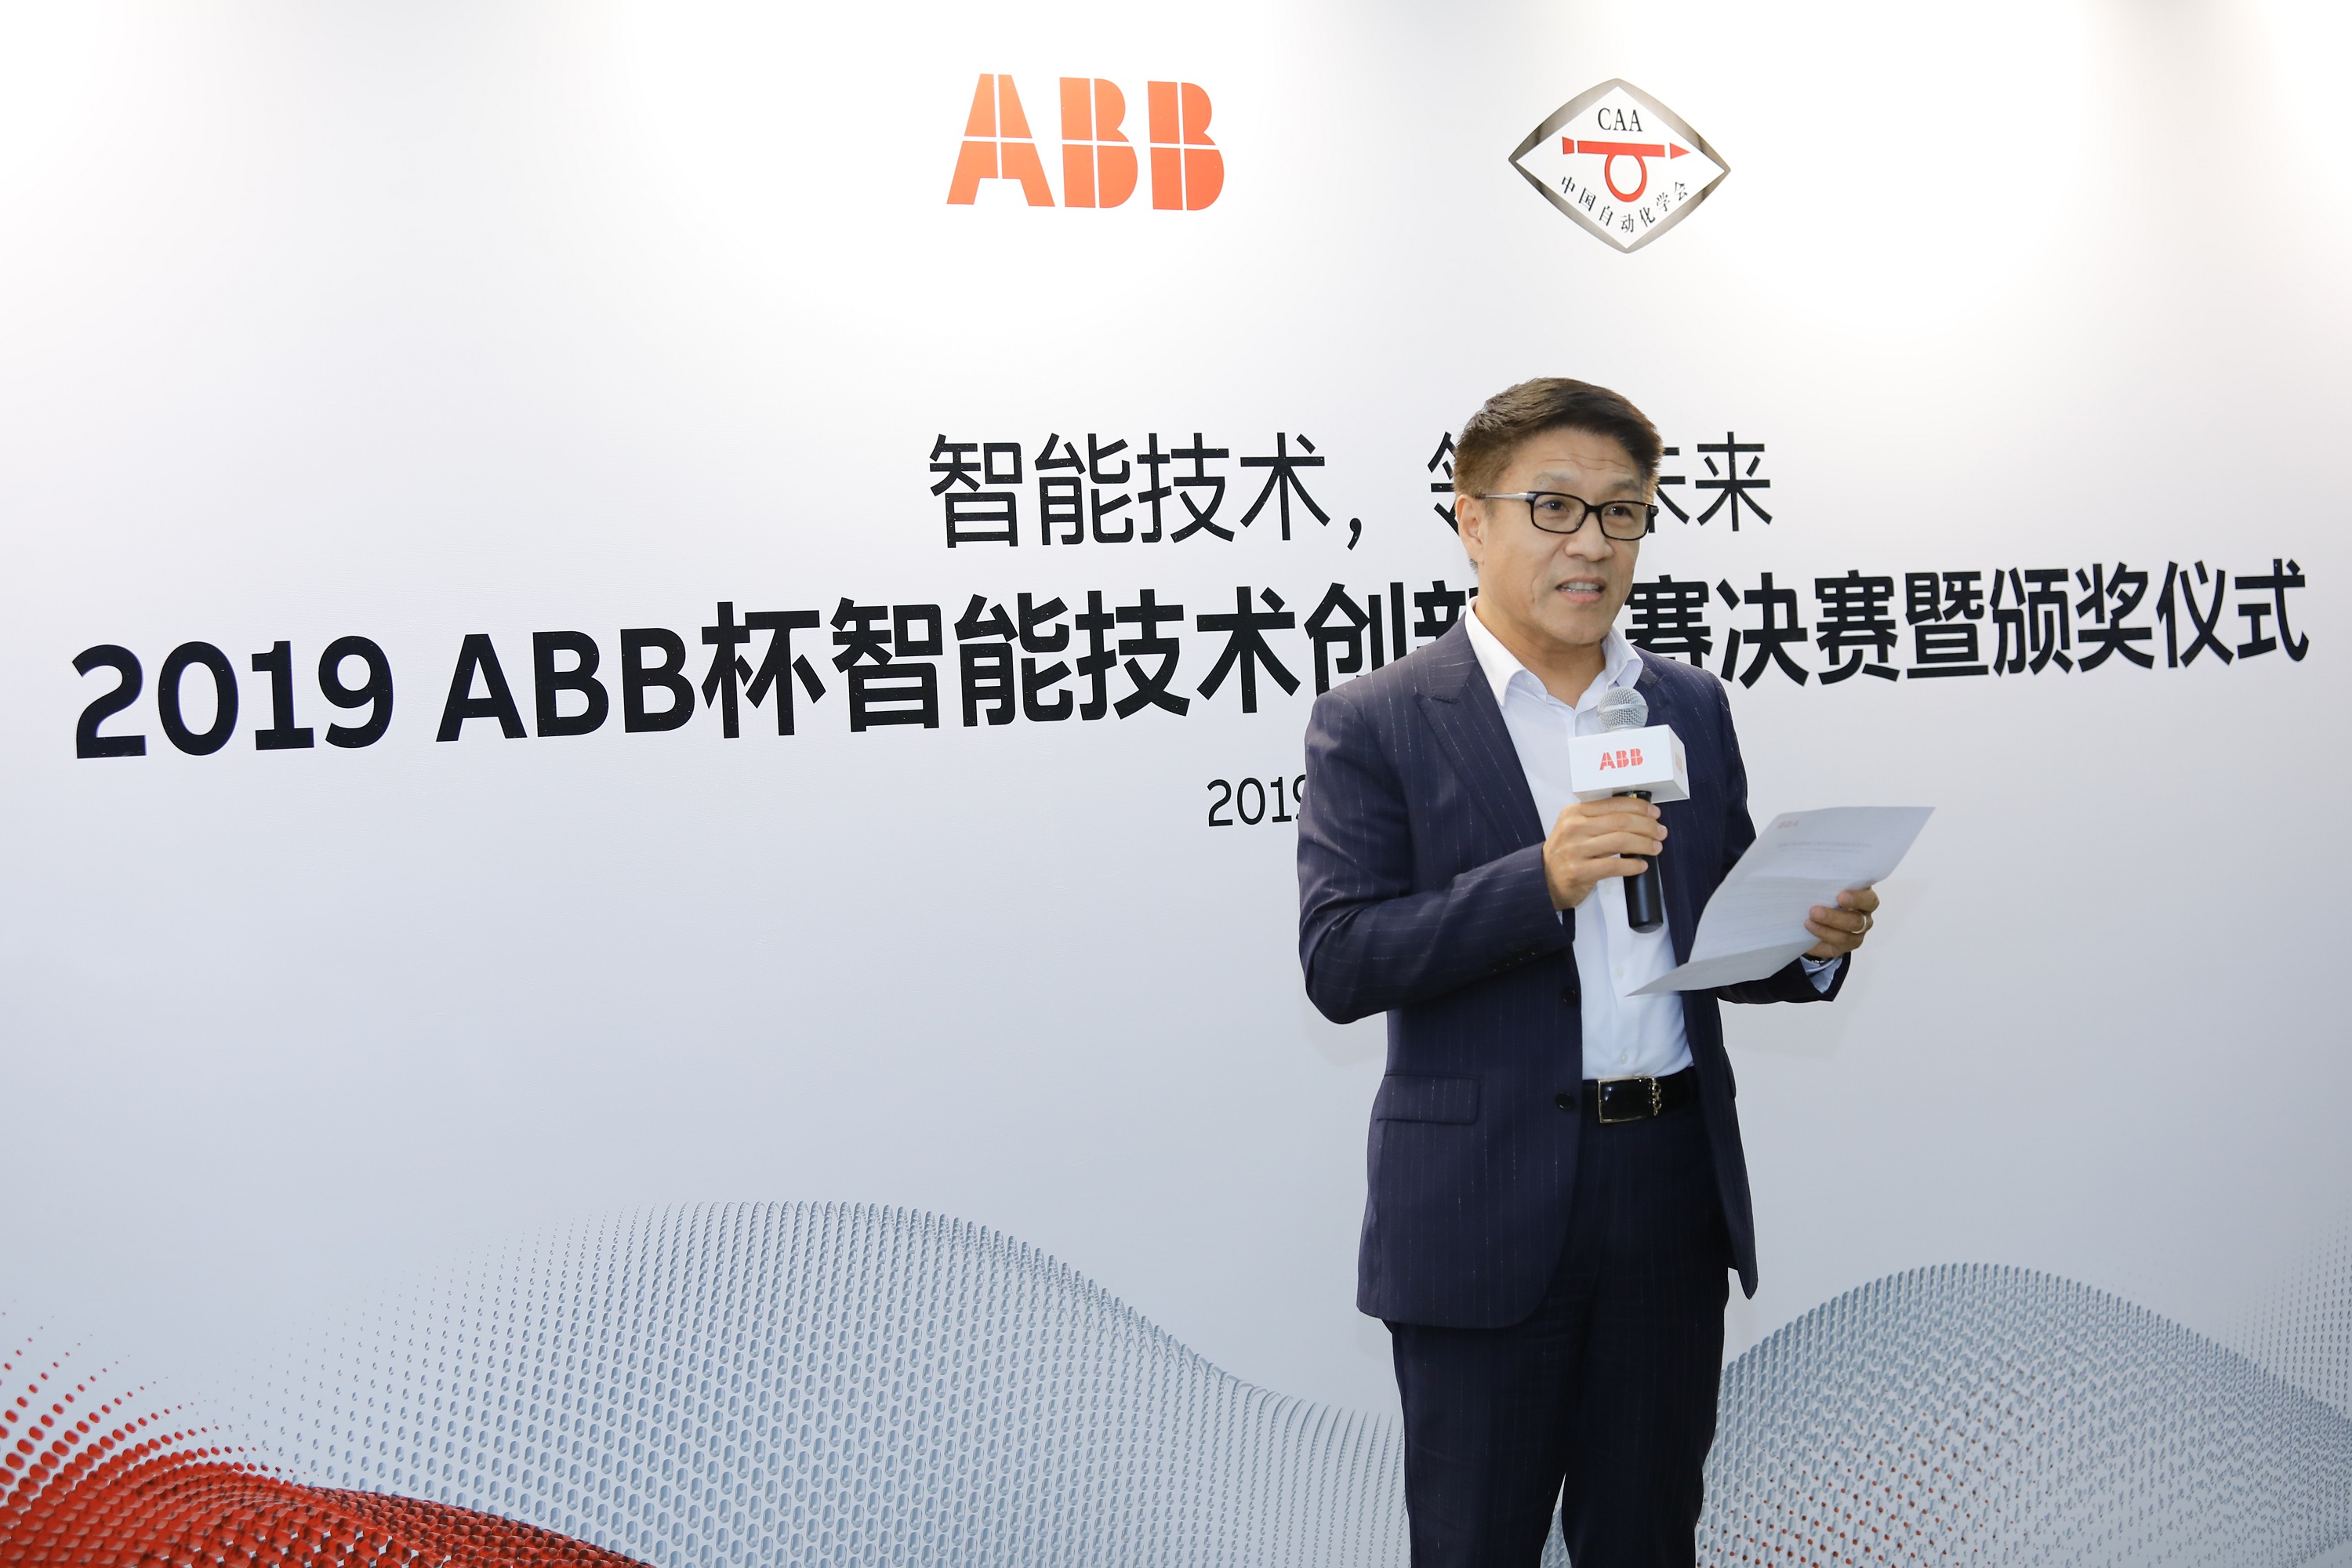 ABB（中国）有限公司总裁张志强先生在颁奖典礼上致辞